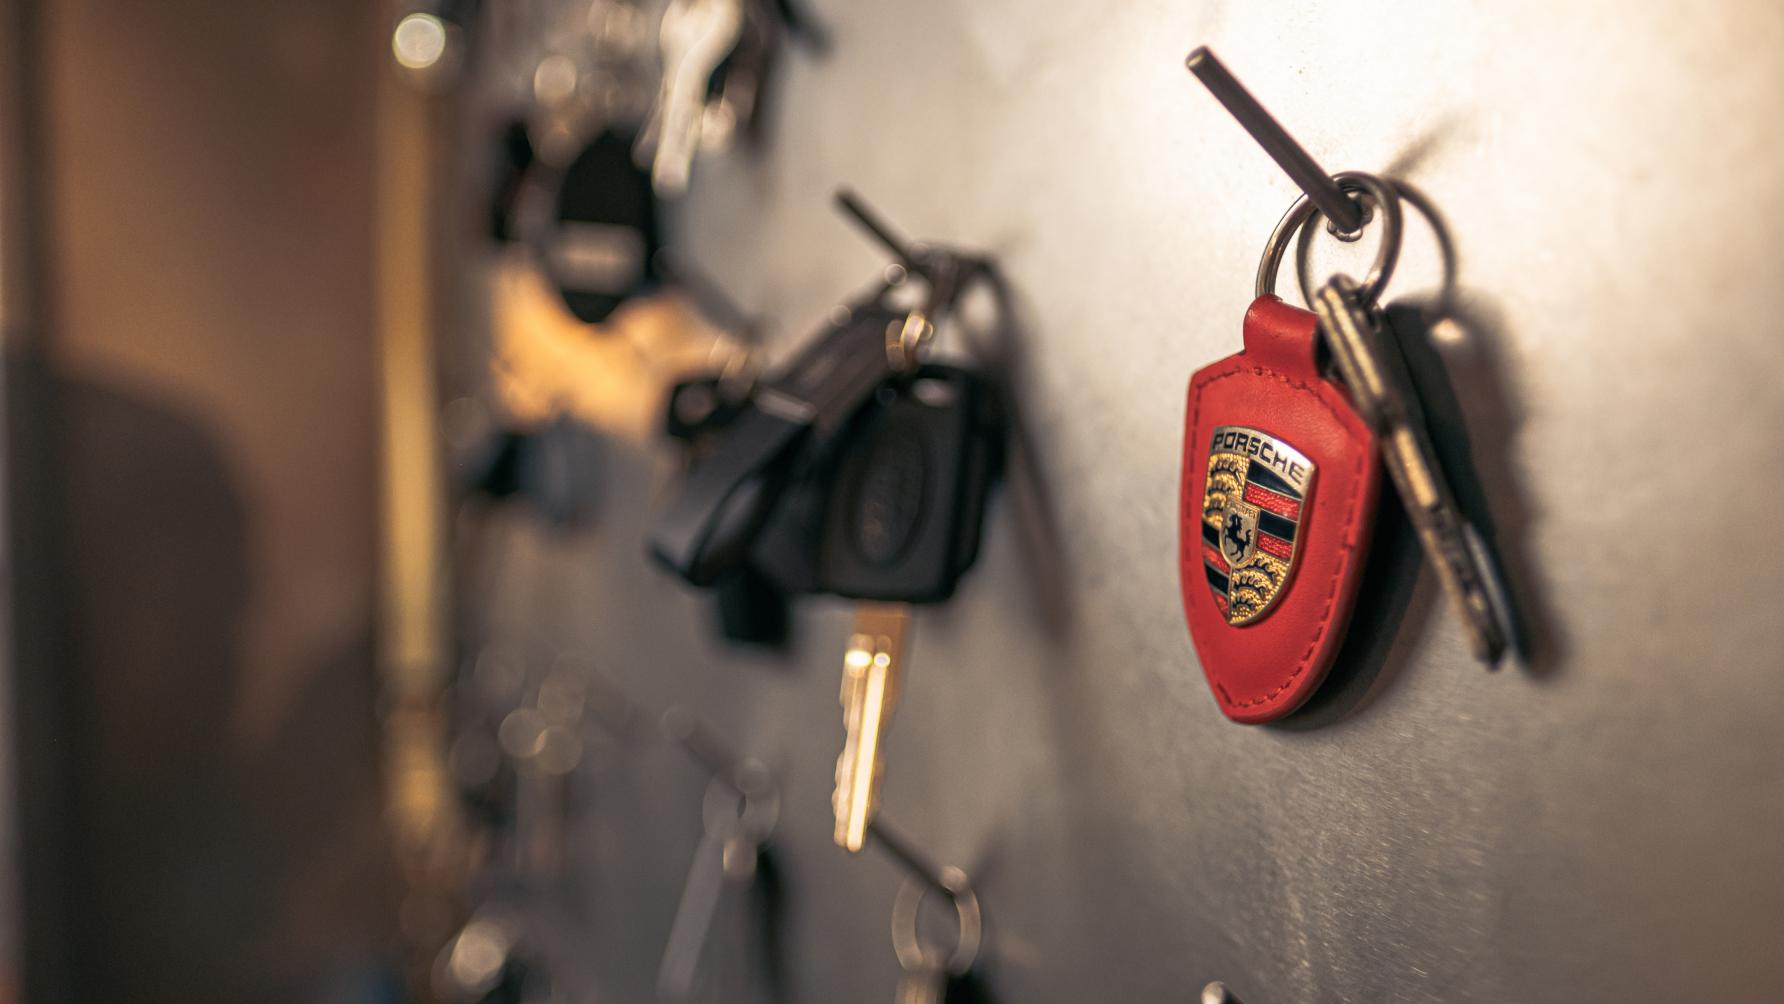 Porsche car keys of Michelle Hambly-Grobler